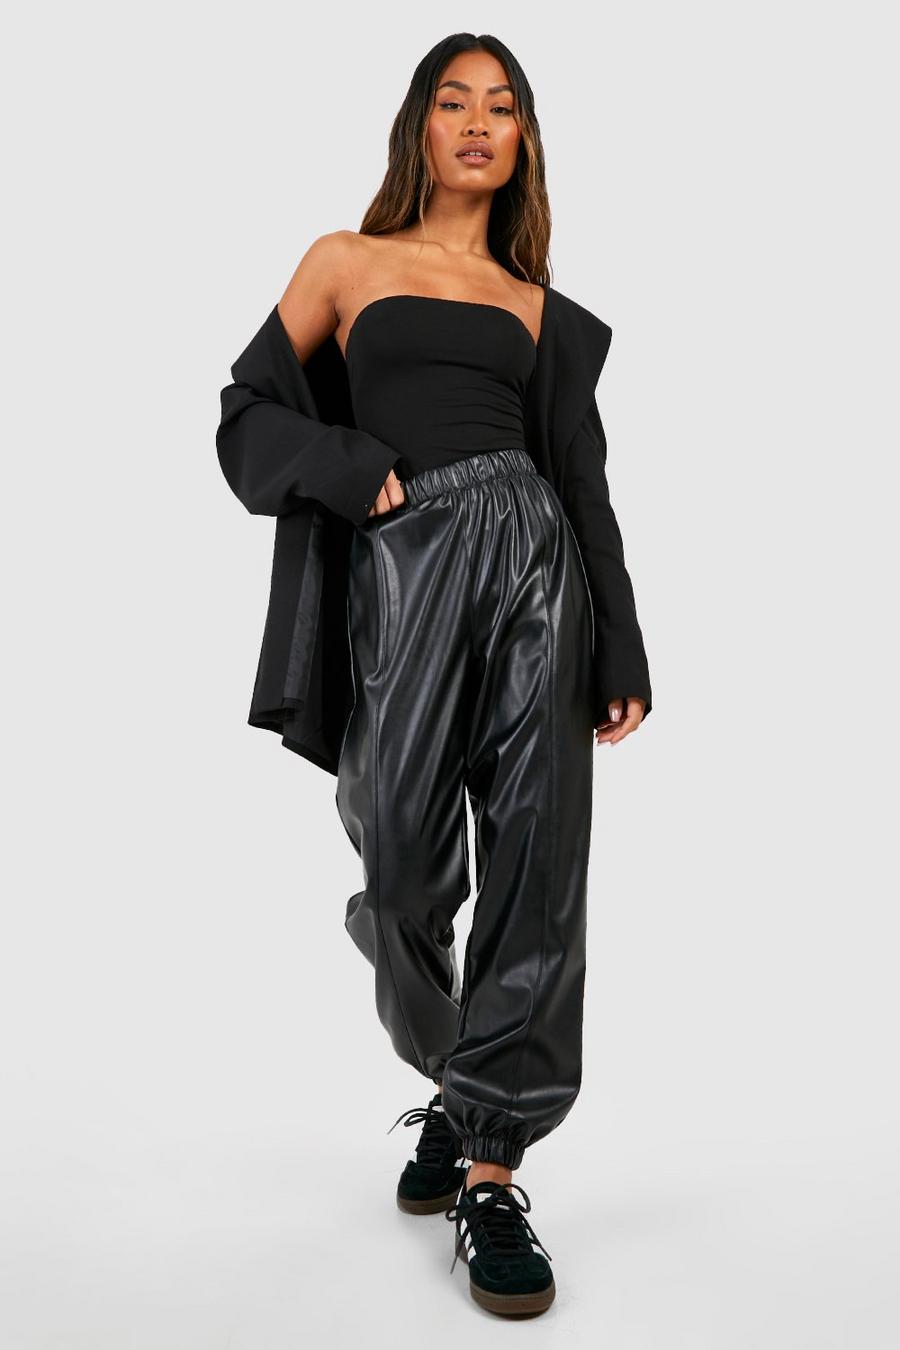 Pantaloni tuta a vita alta effetto pelle stile Cargo, Black nero